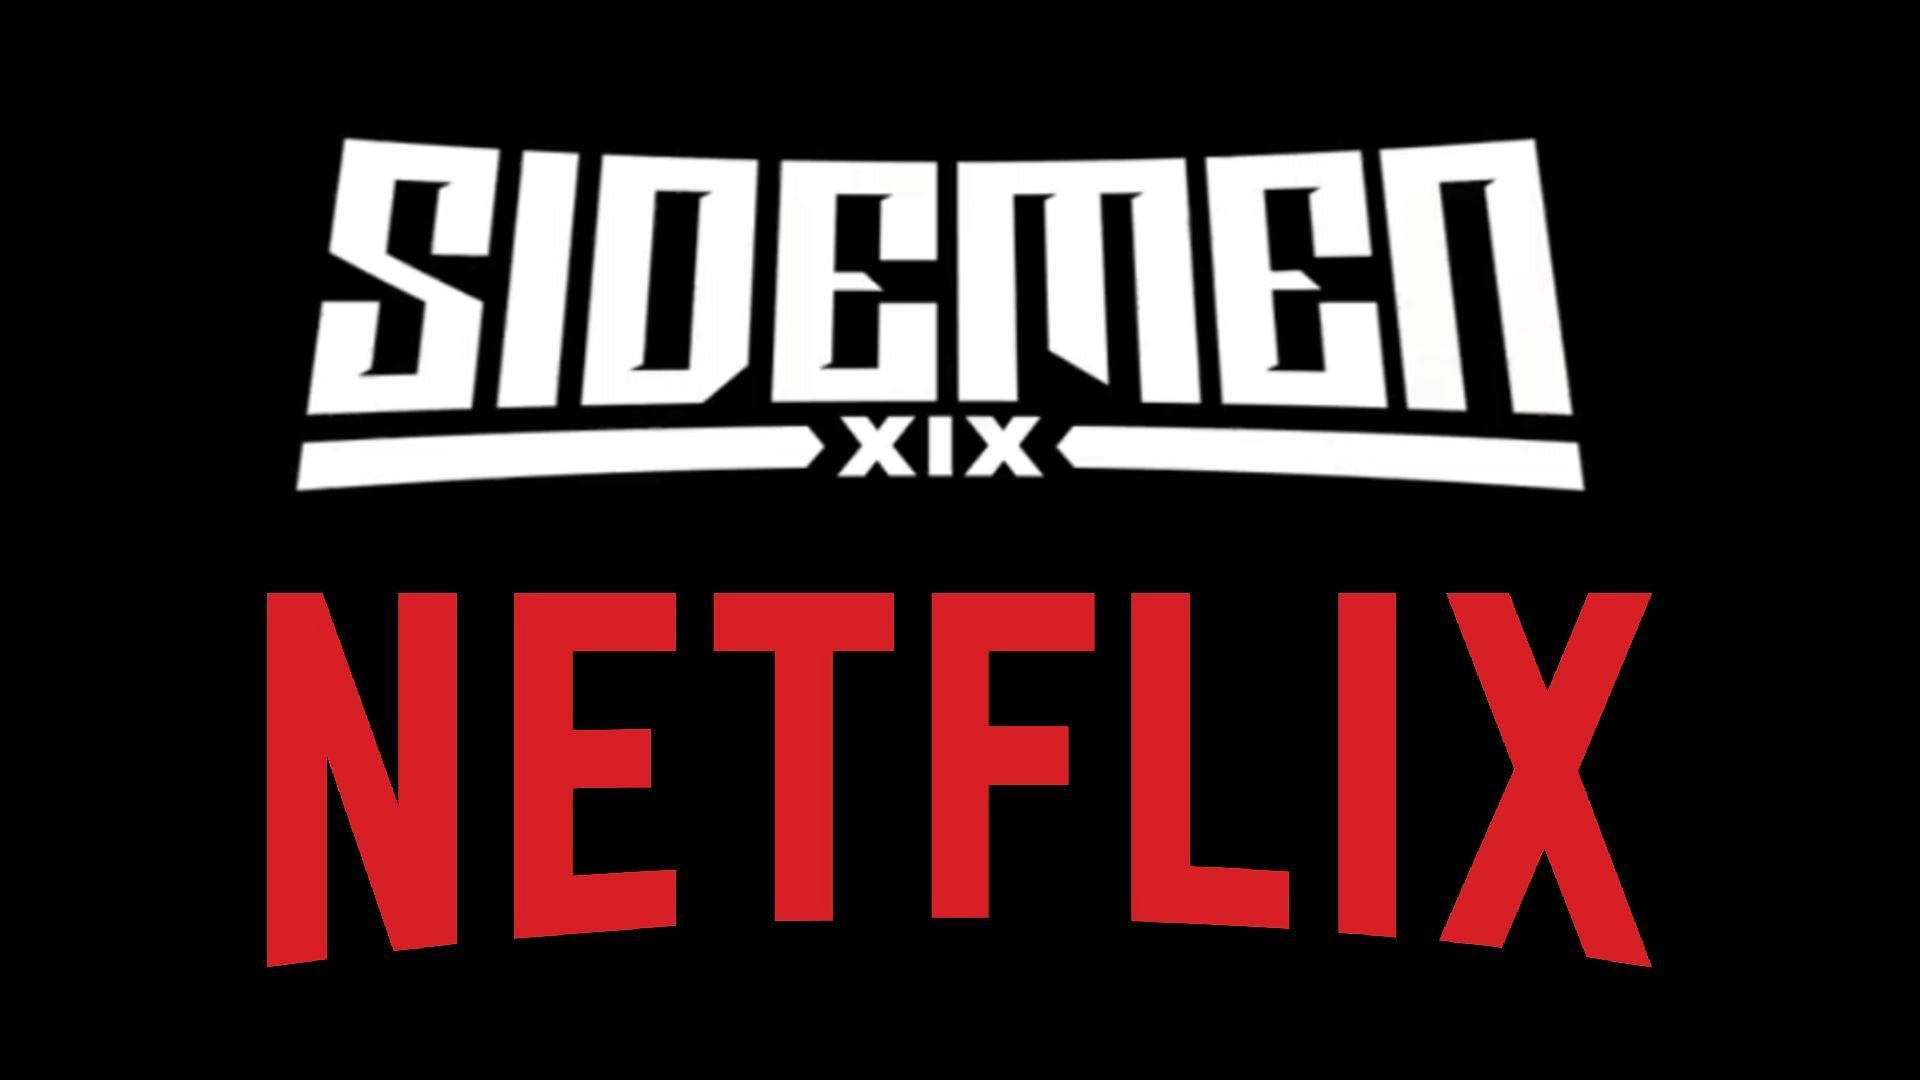 Sidemen have announced a show on Netflix, garnering excitement from fans (Image via Netflix and Sidemen)